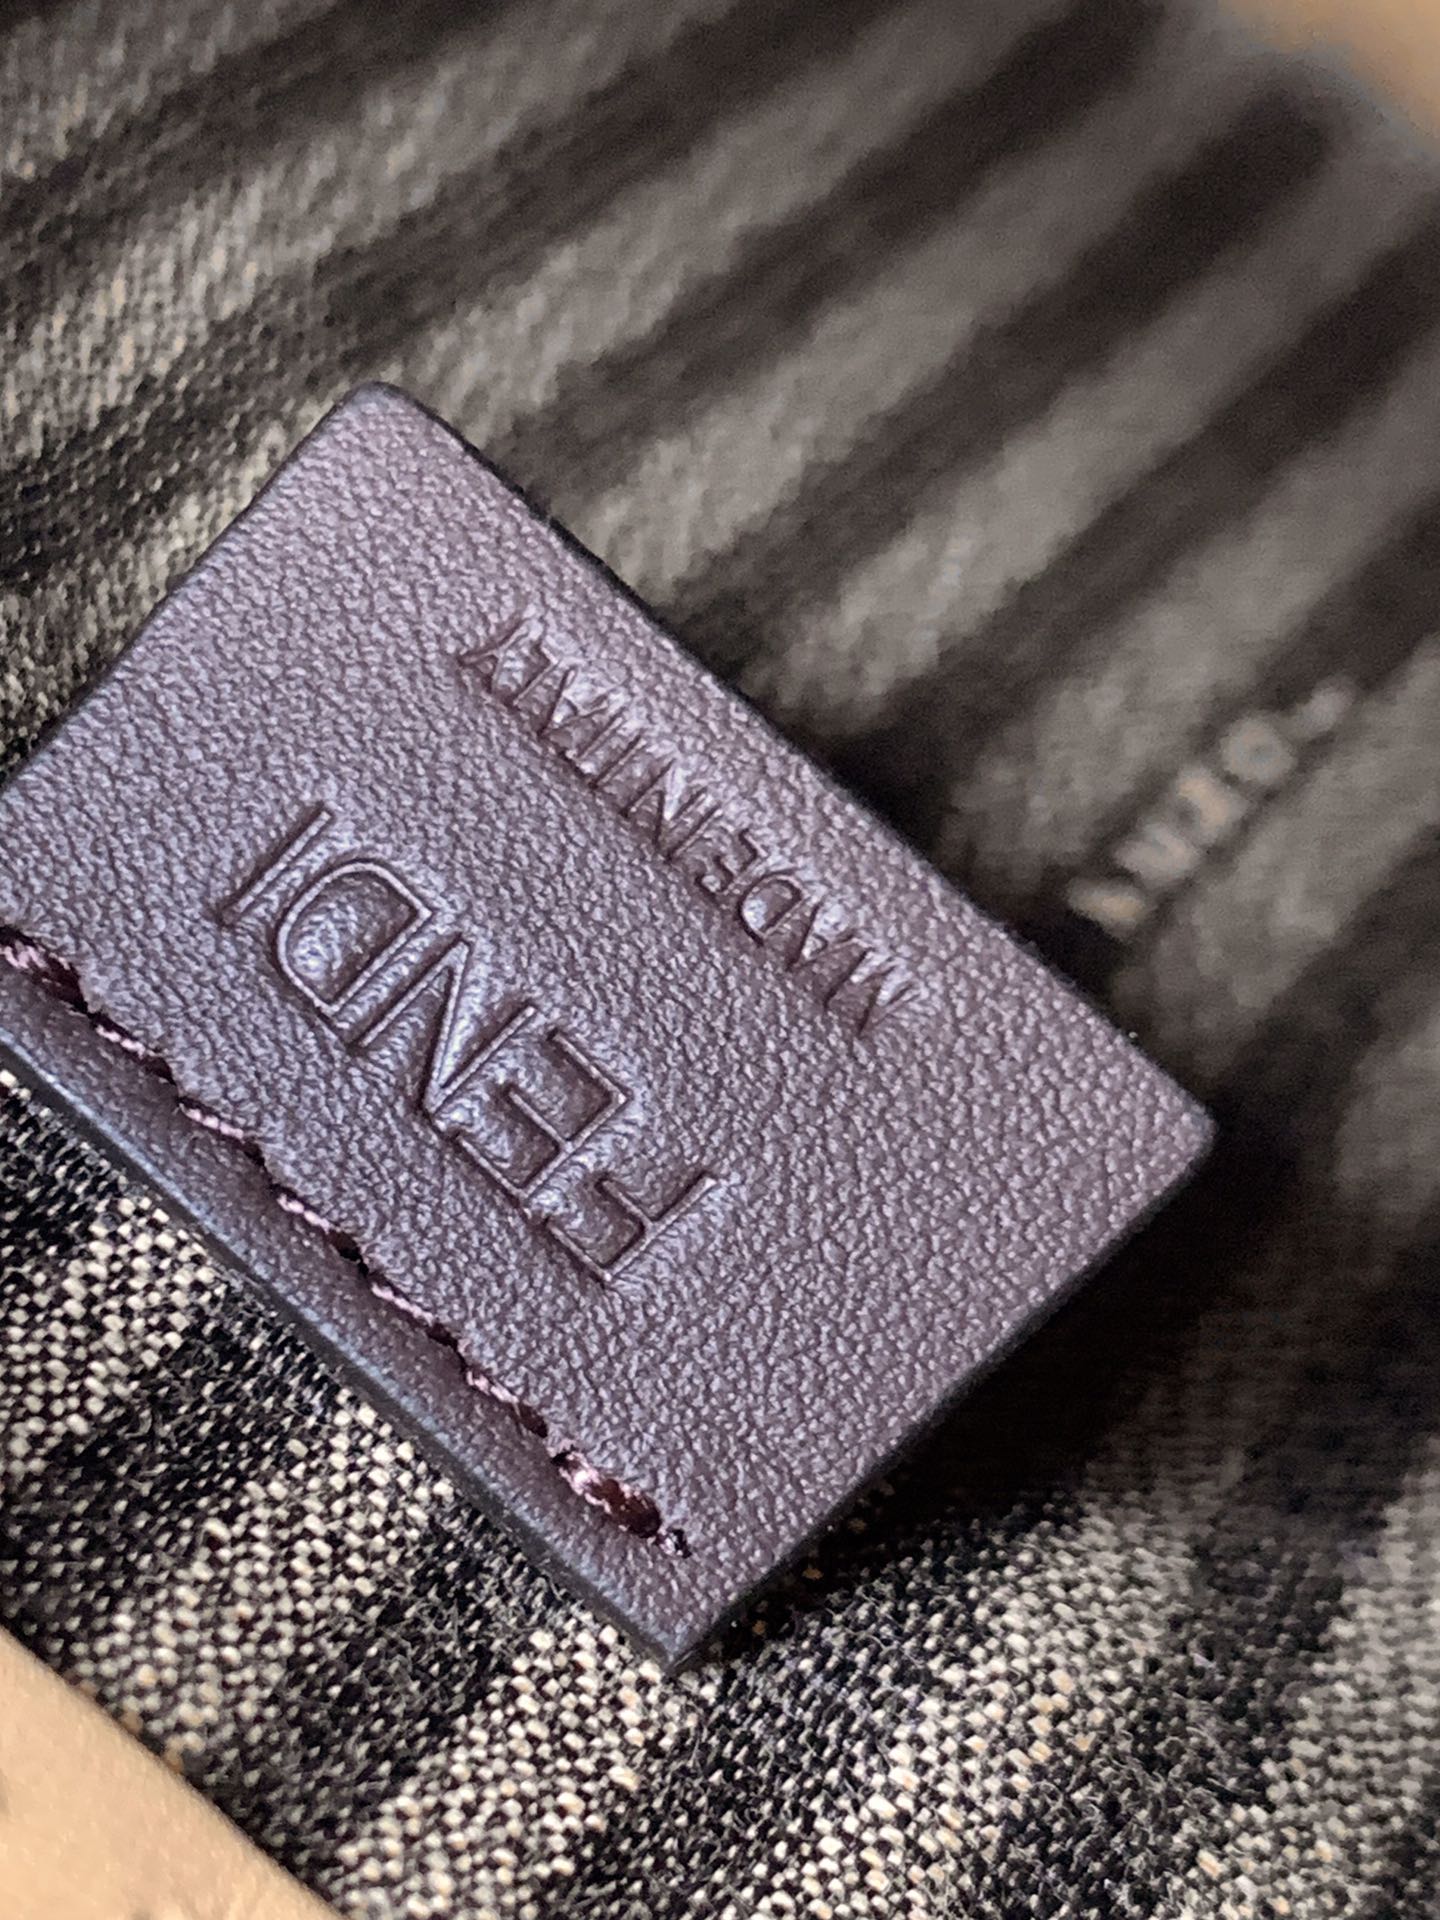 FendiMinisunshineshopper手提包饰有烫印FENDROMA字样和玳瑁色提手配备带衬里